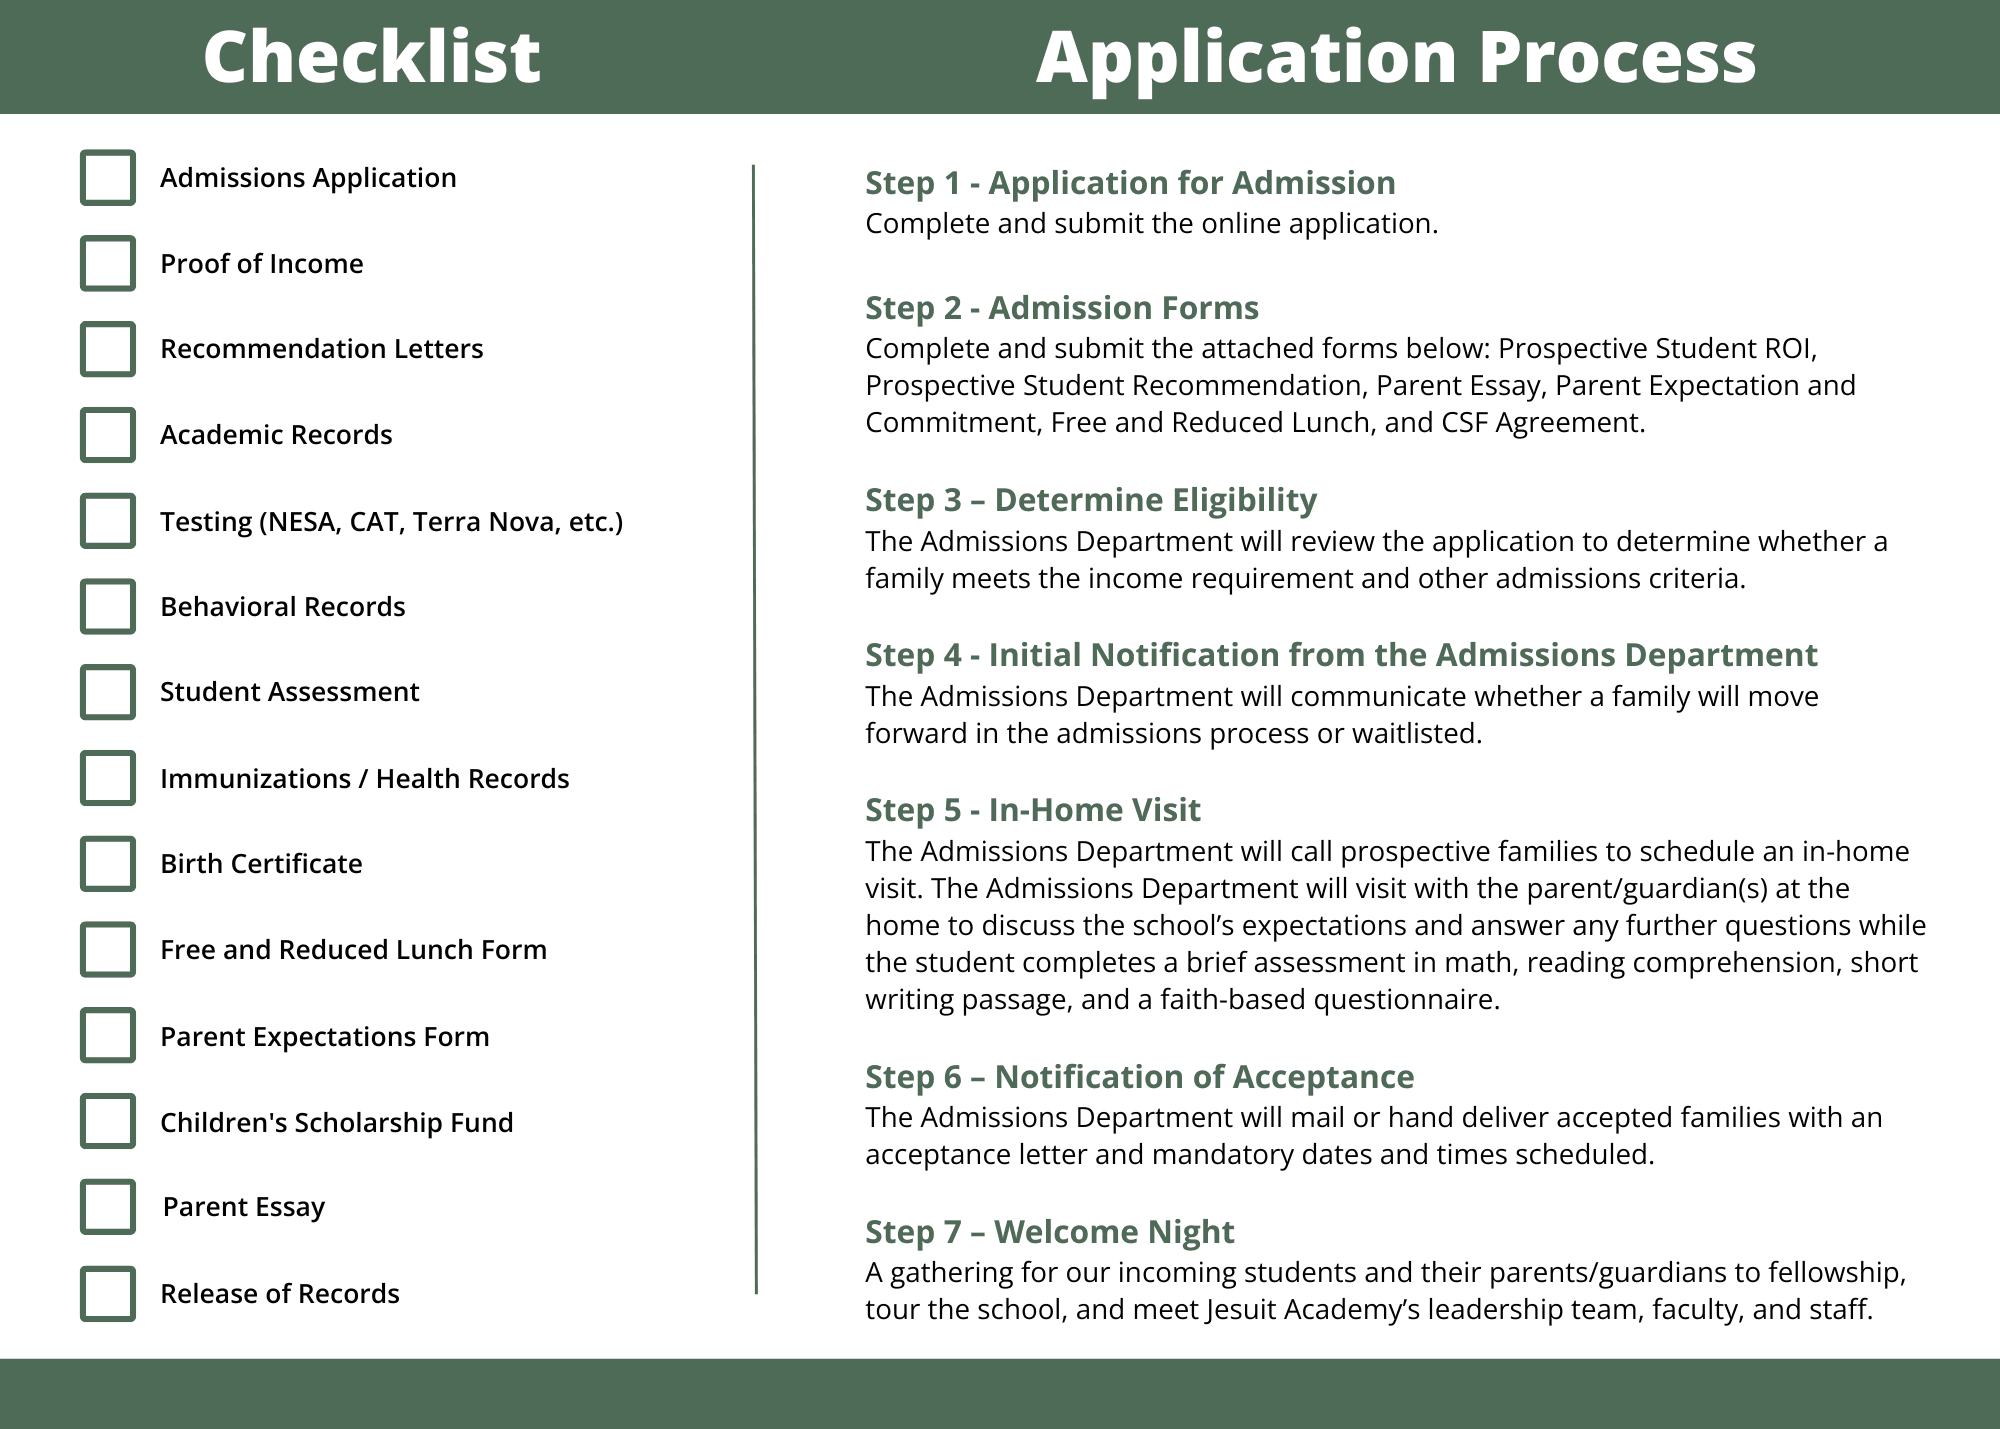 Application process & checklist.